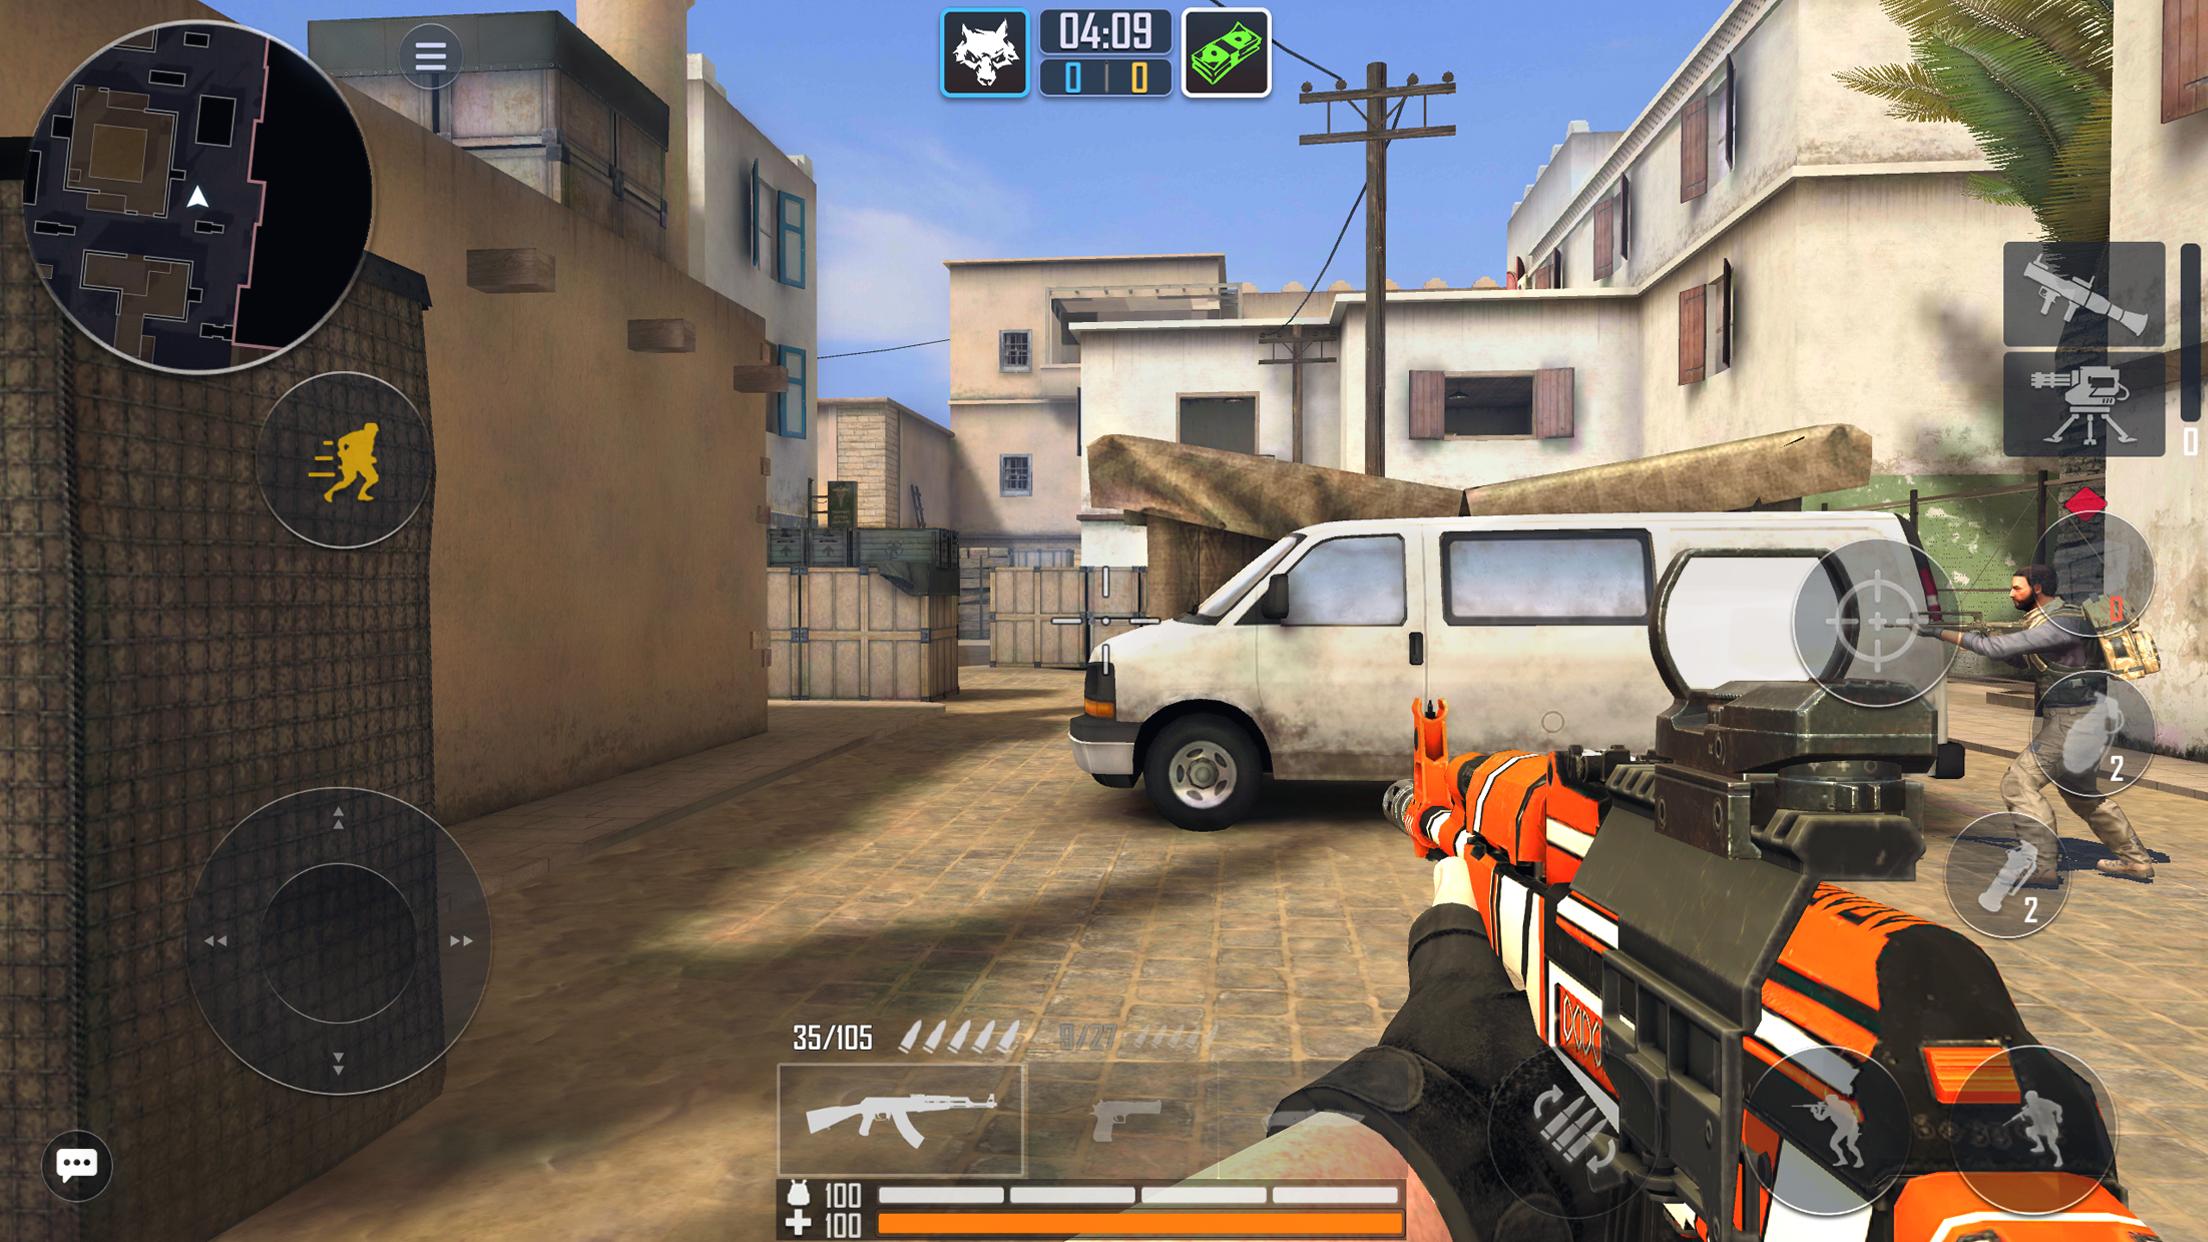 Fire Strike Online - Free Shooter FPS 1.26 Screenshot 1